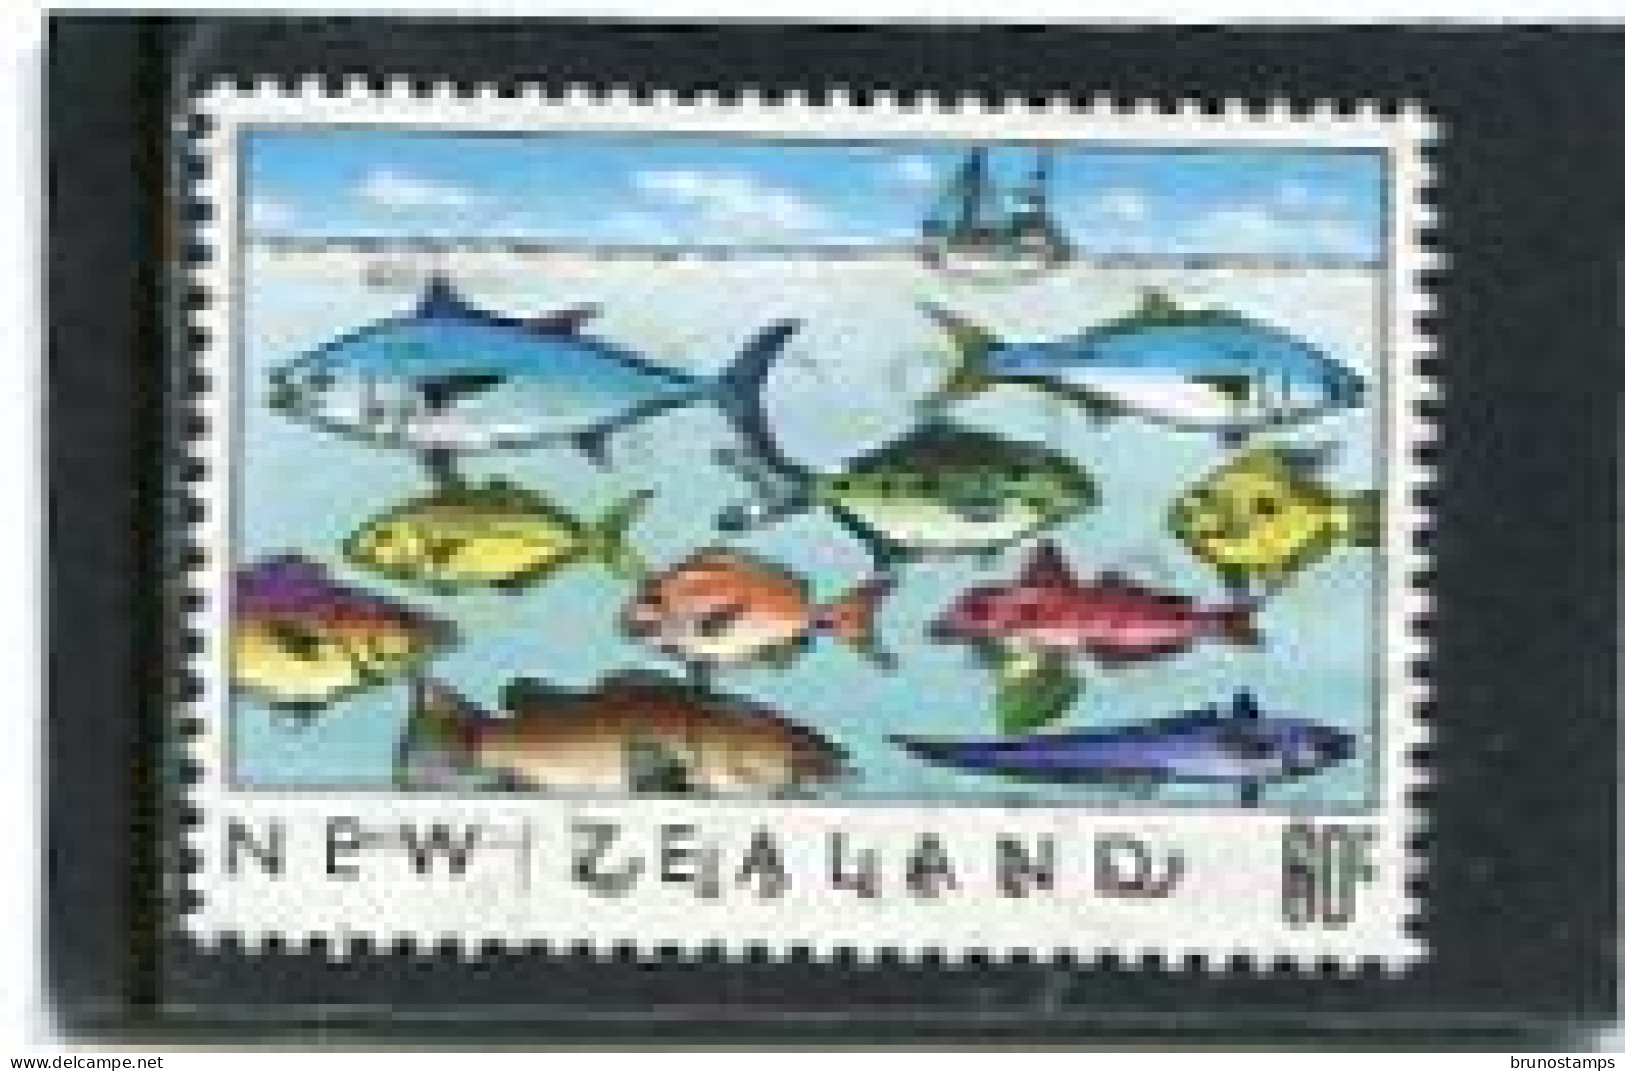 NEW ZEALAND - 1989  60c  FISHING  FINE USED - Gebraucht